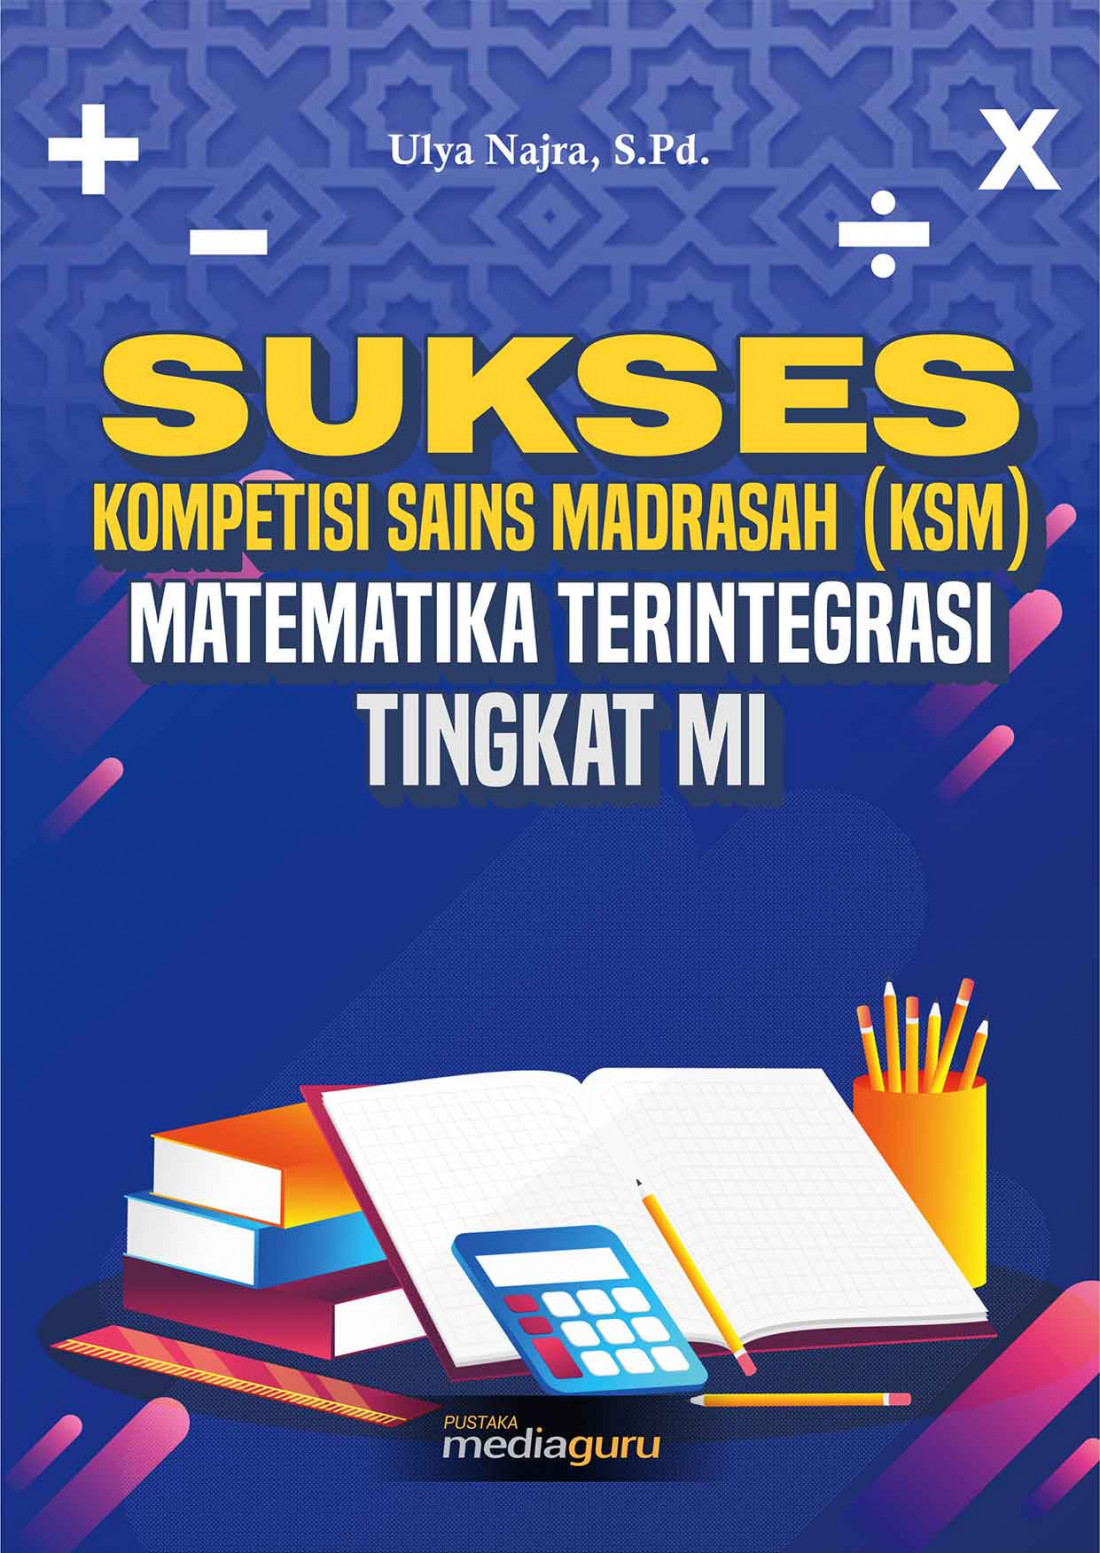 Sukses Kompetisi Sains Madrasah (KSM) Matematika Terintegrasi Tingkat MI